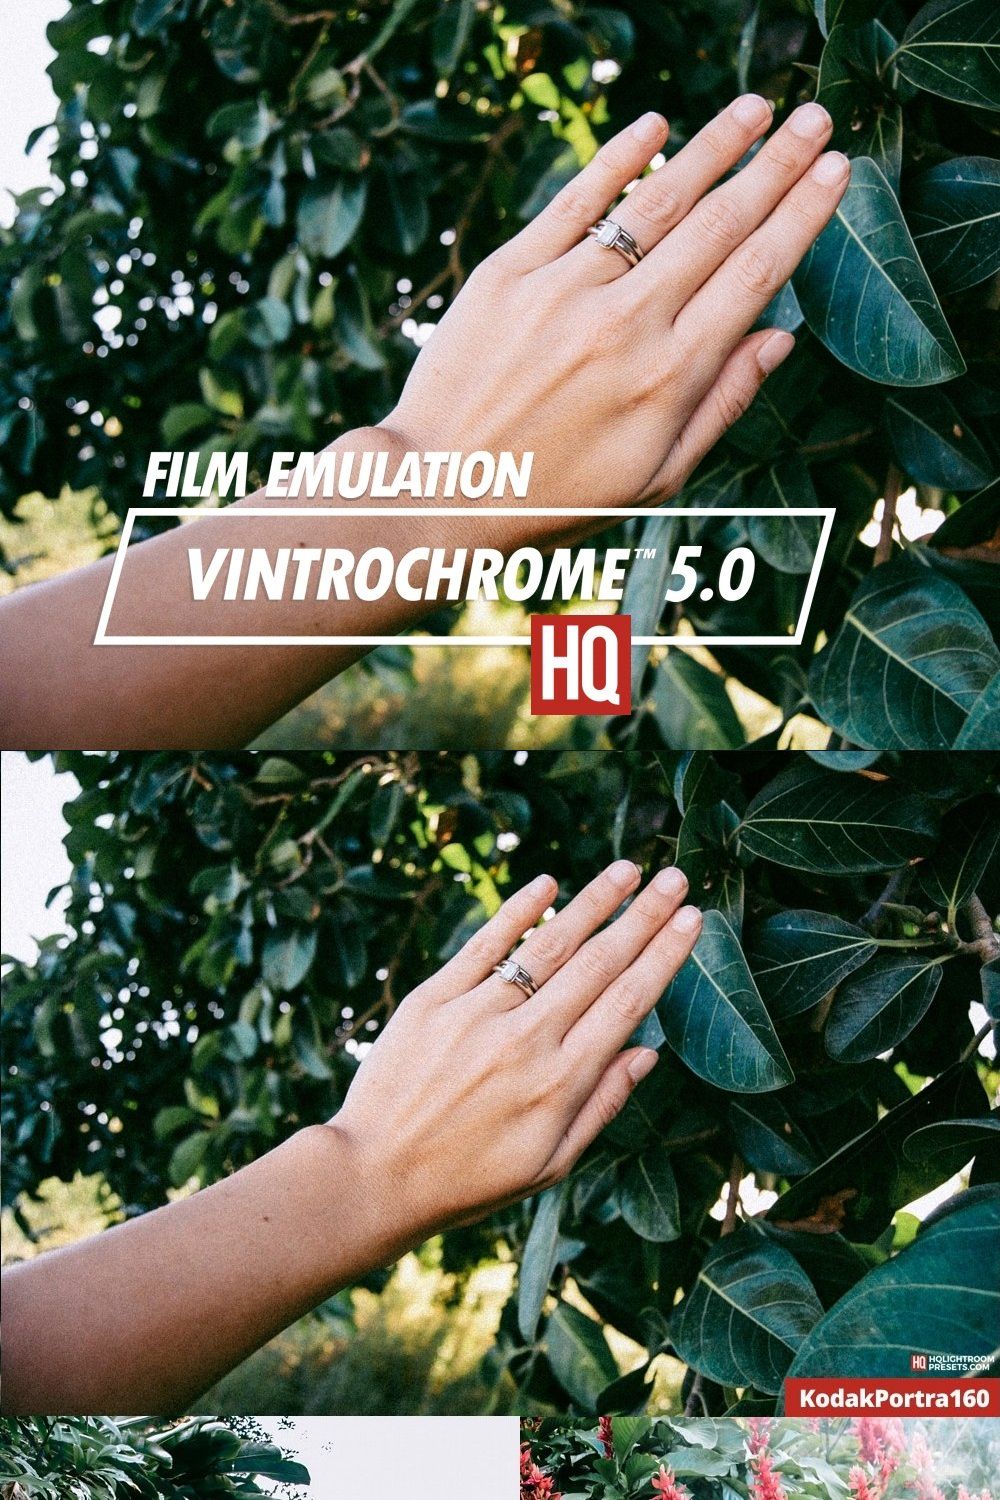 Vintrochrome 5.0 | Film Emulation pinterest preview image.